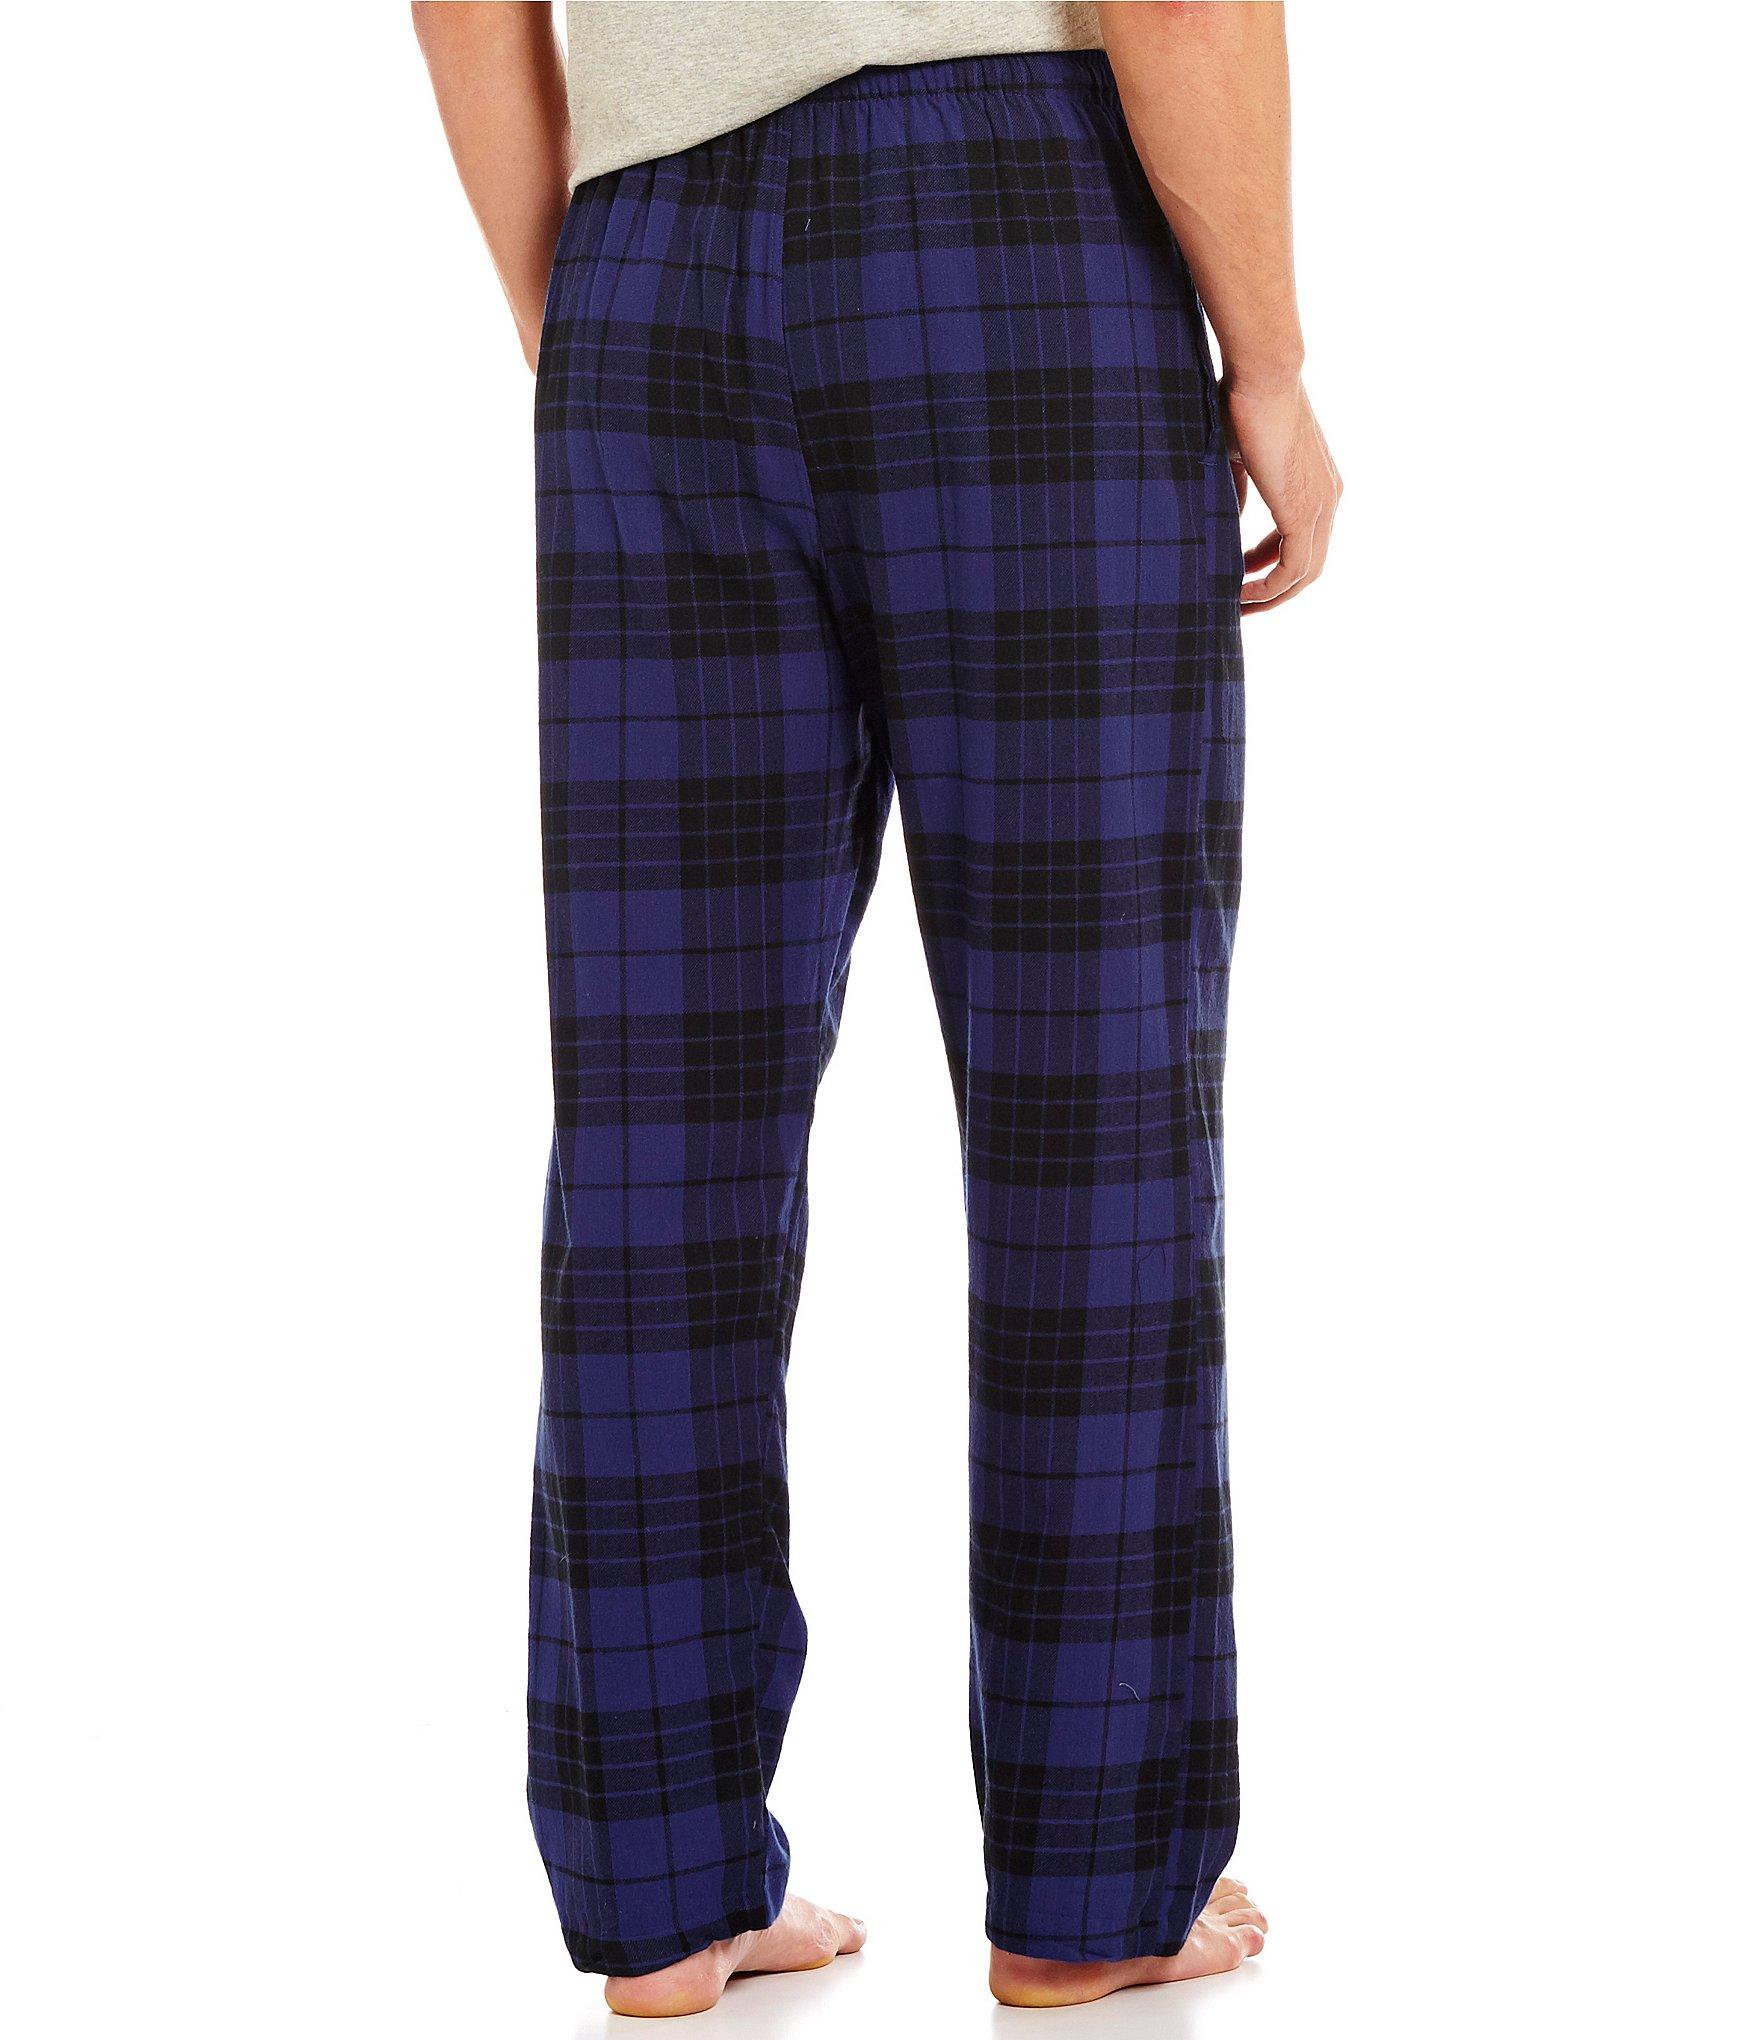 Lyst - Polo Ralph Lauren Plaid Flannel Pajama Pants in Blue for Men